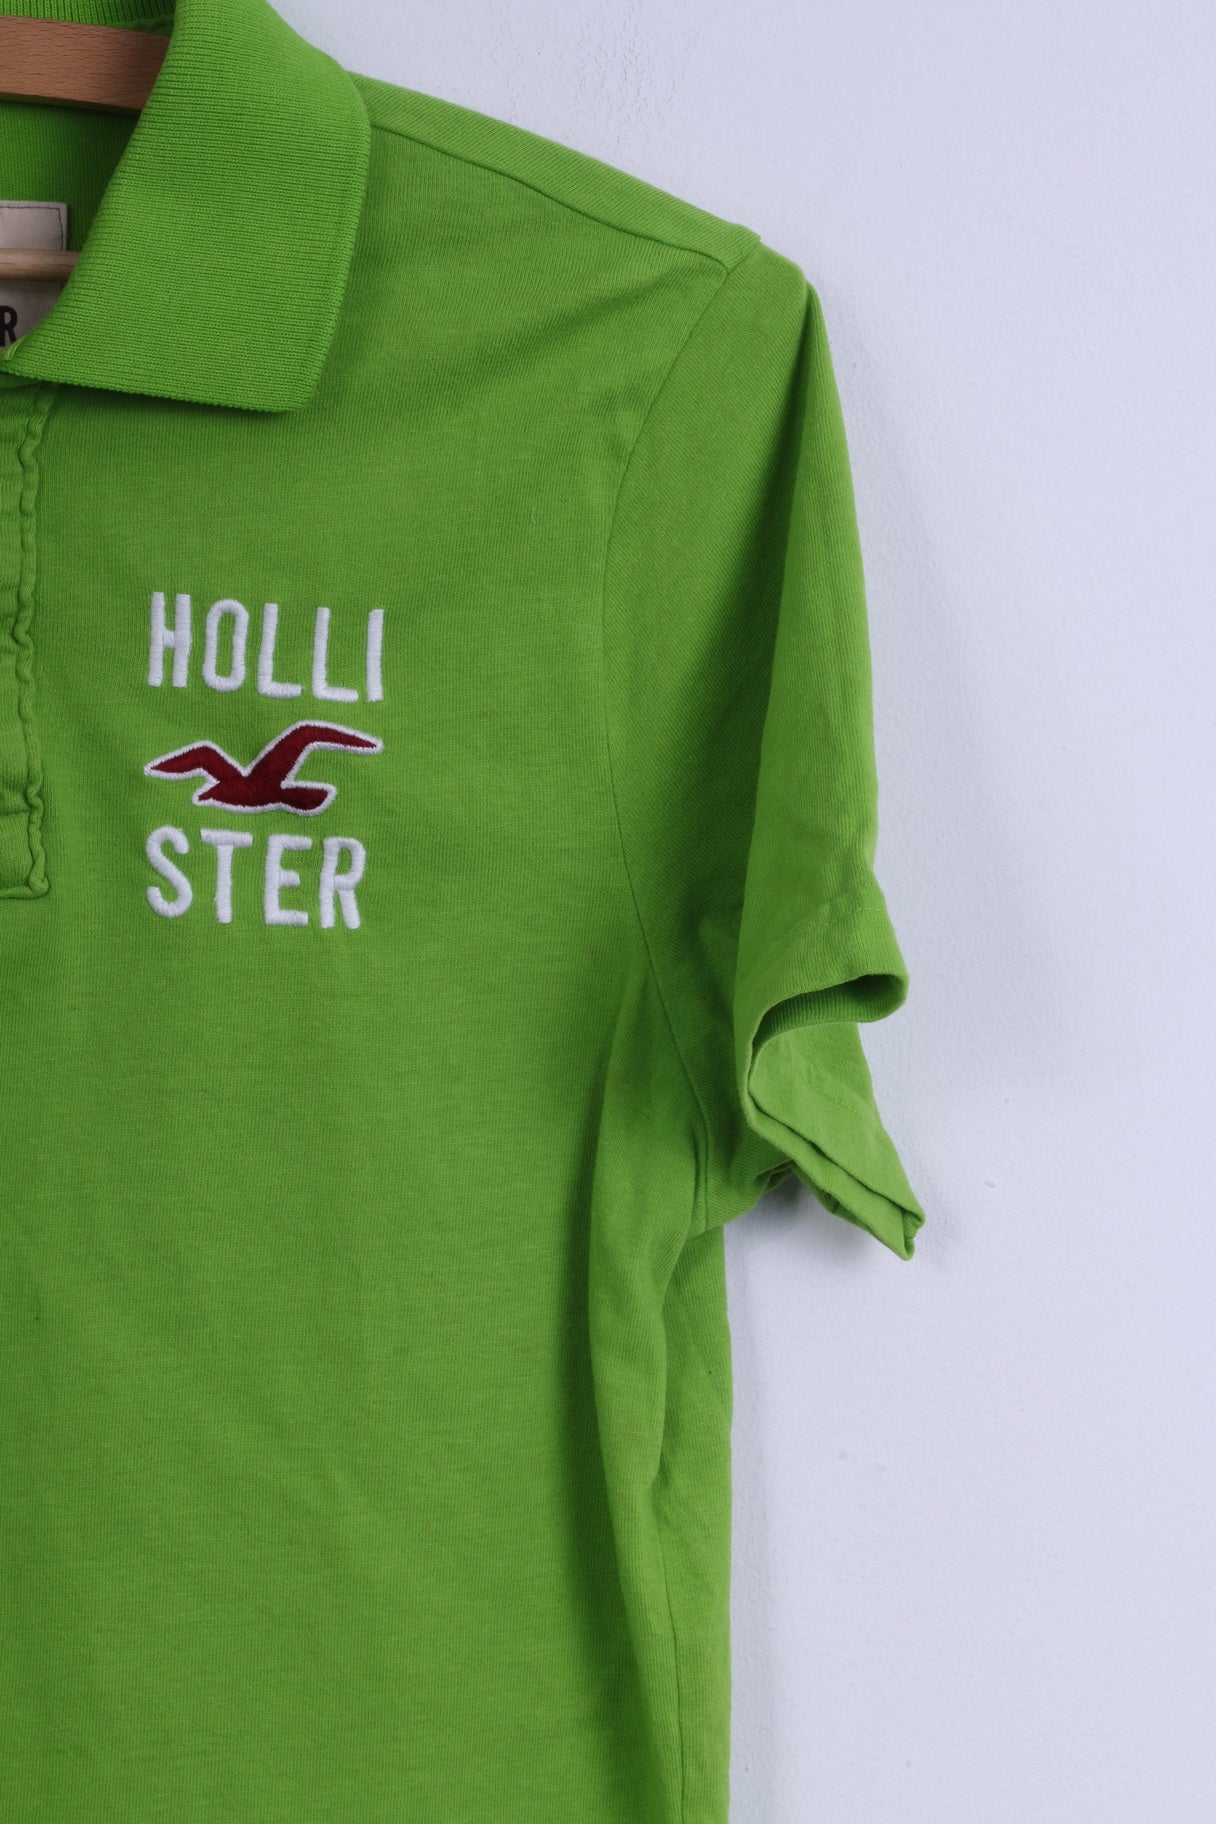 Hollister California Mens M Polo Shirt Green Cotton Short Sleeve